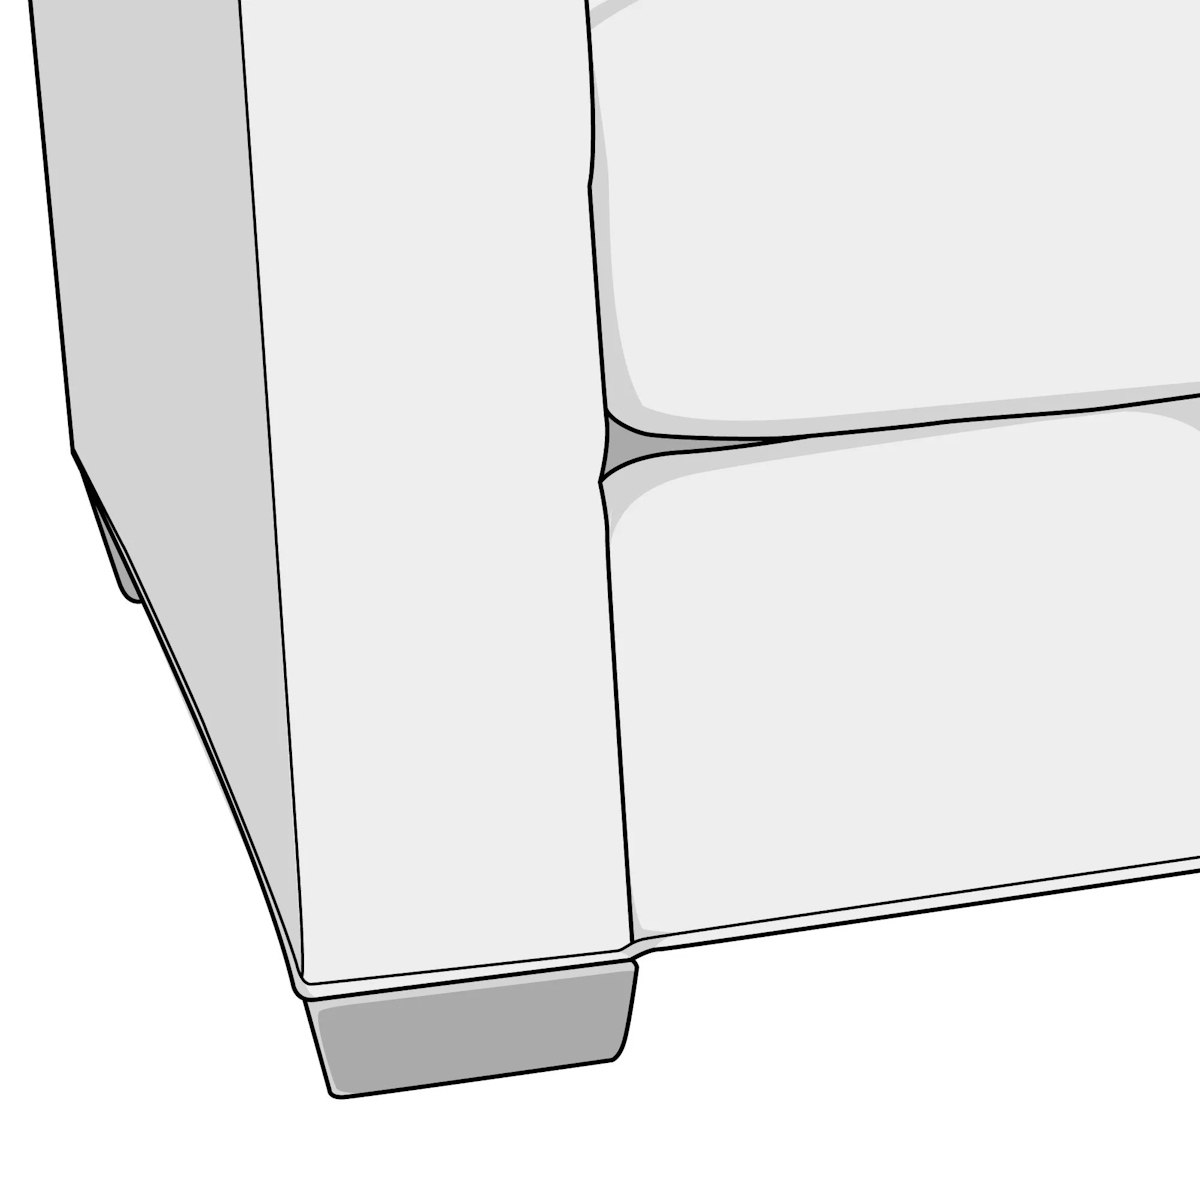 Illustration of block foot style sofa